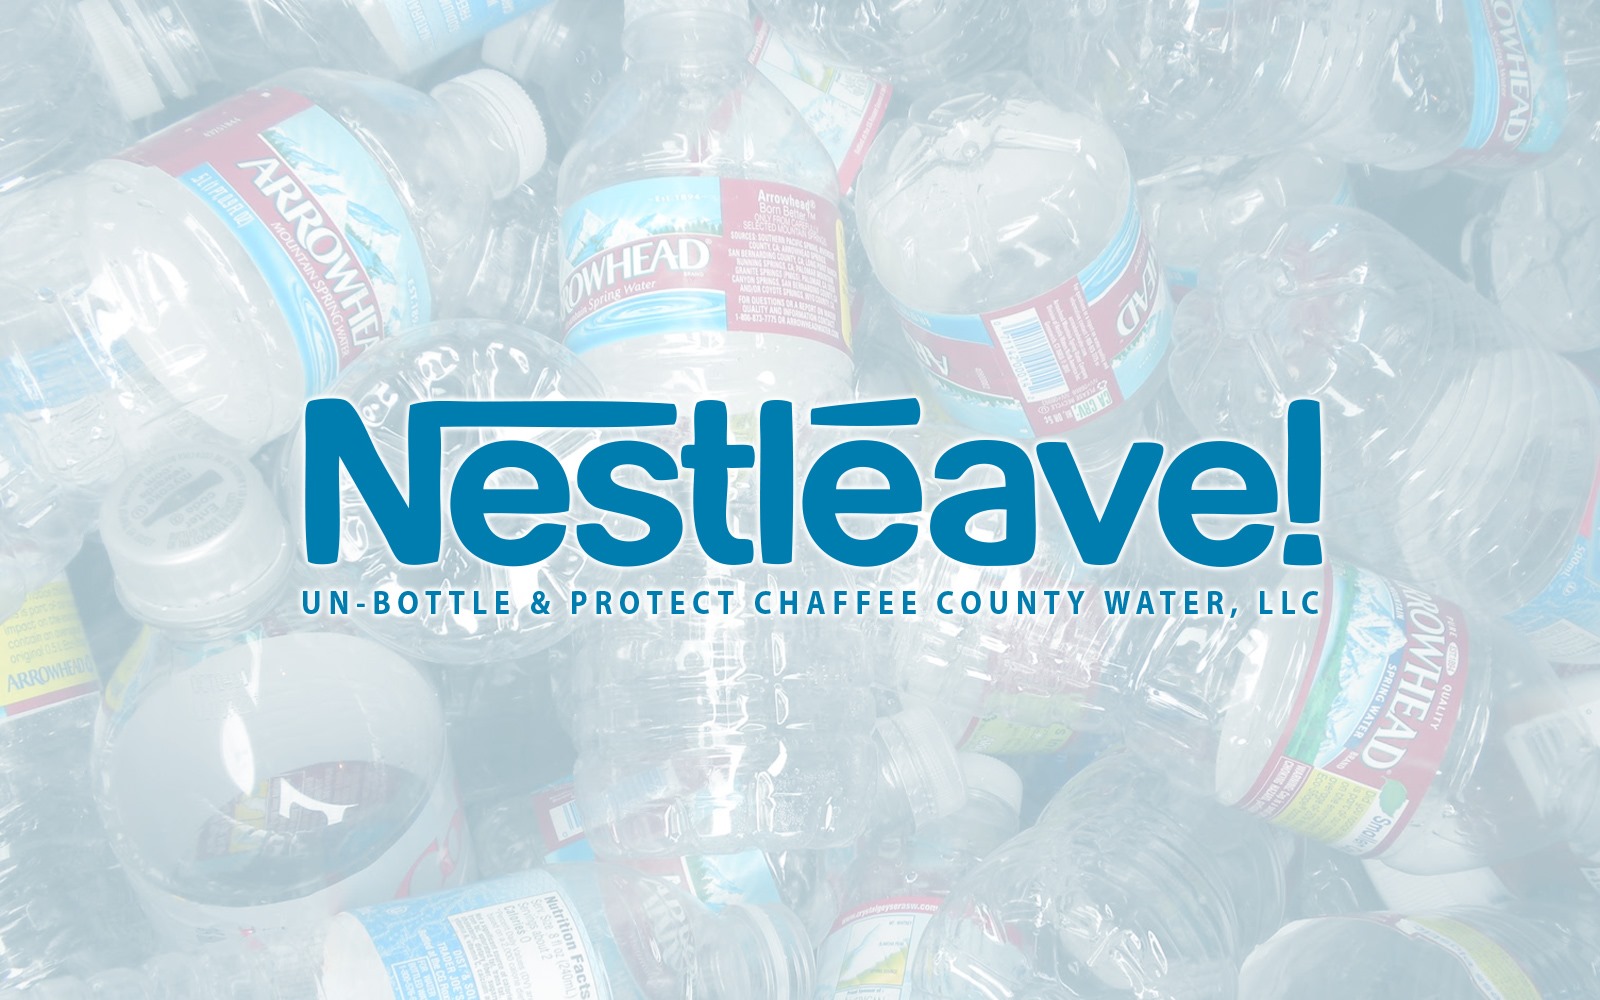 U.S. Rep. Tlaib headlines digital rally opposing Nestlé